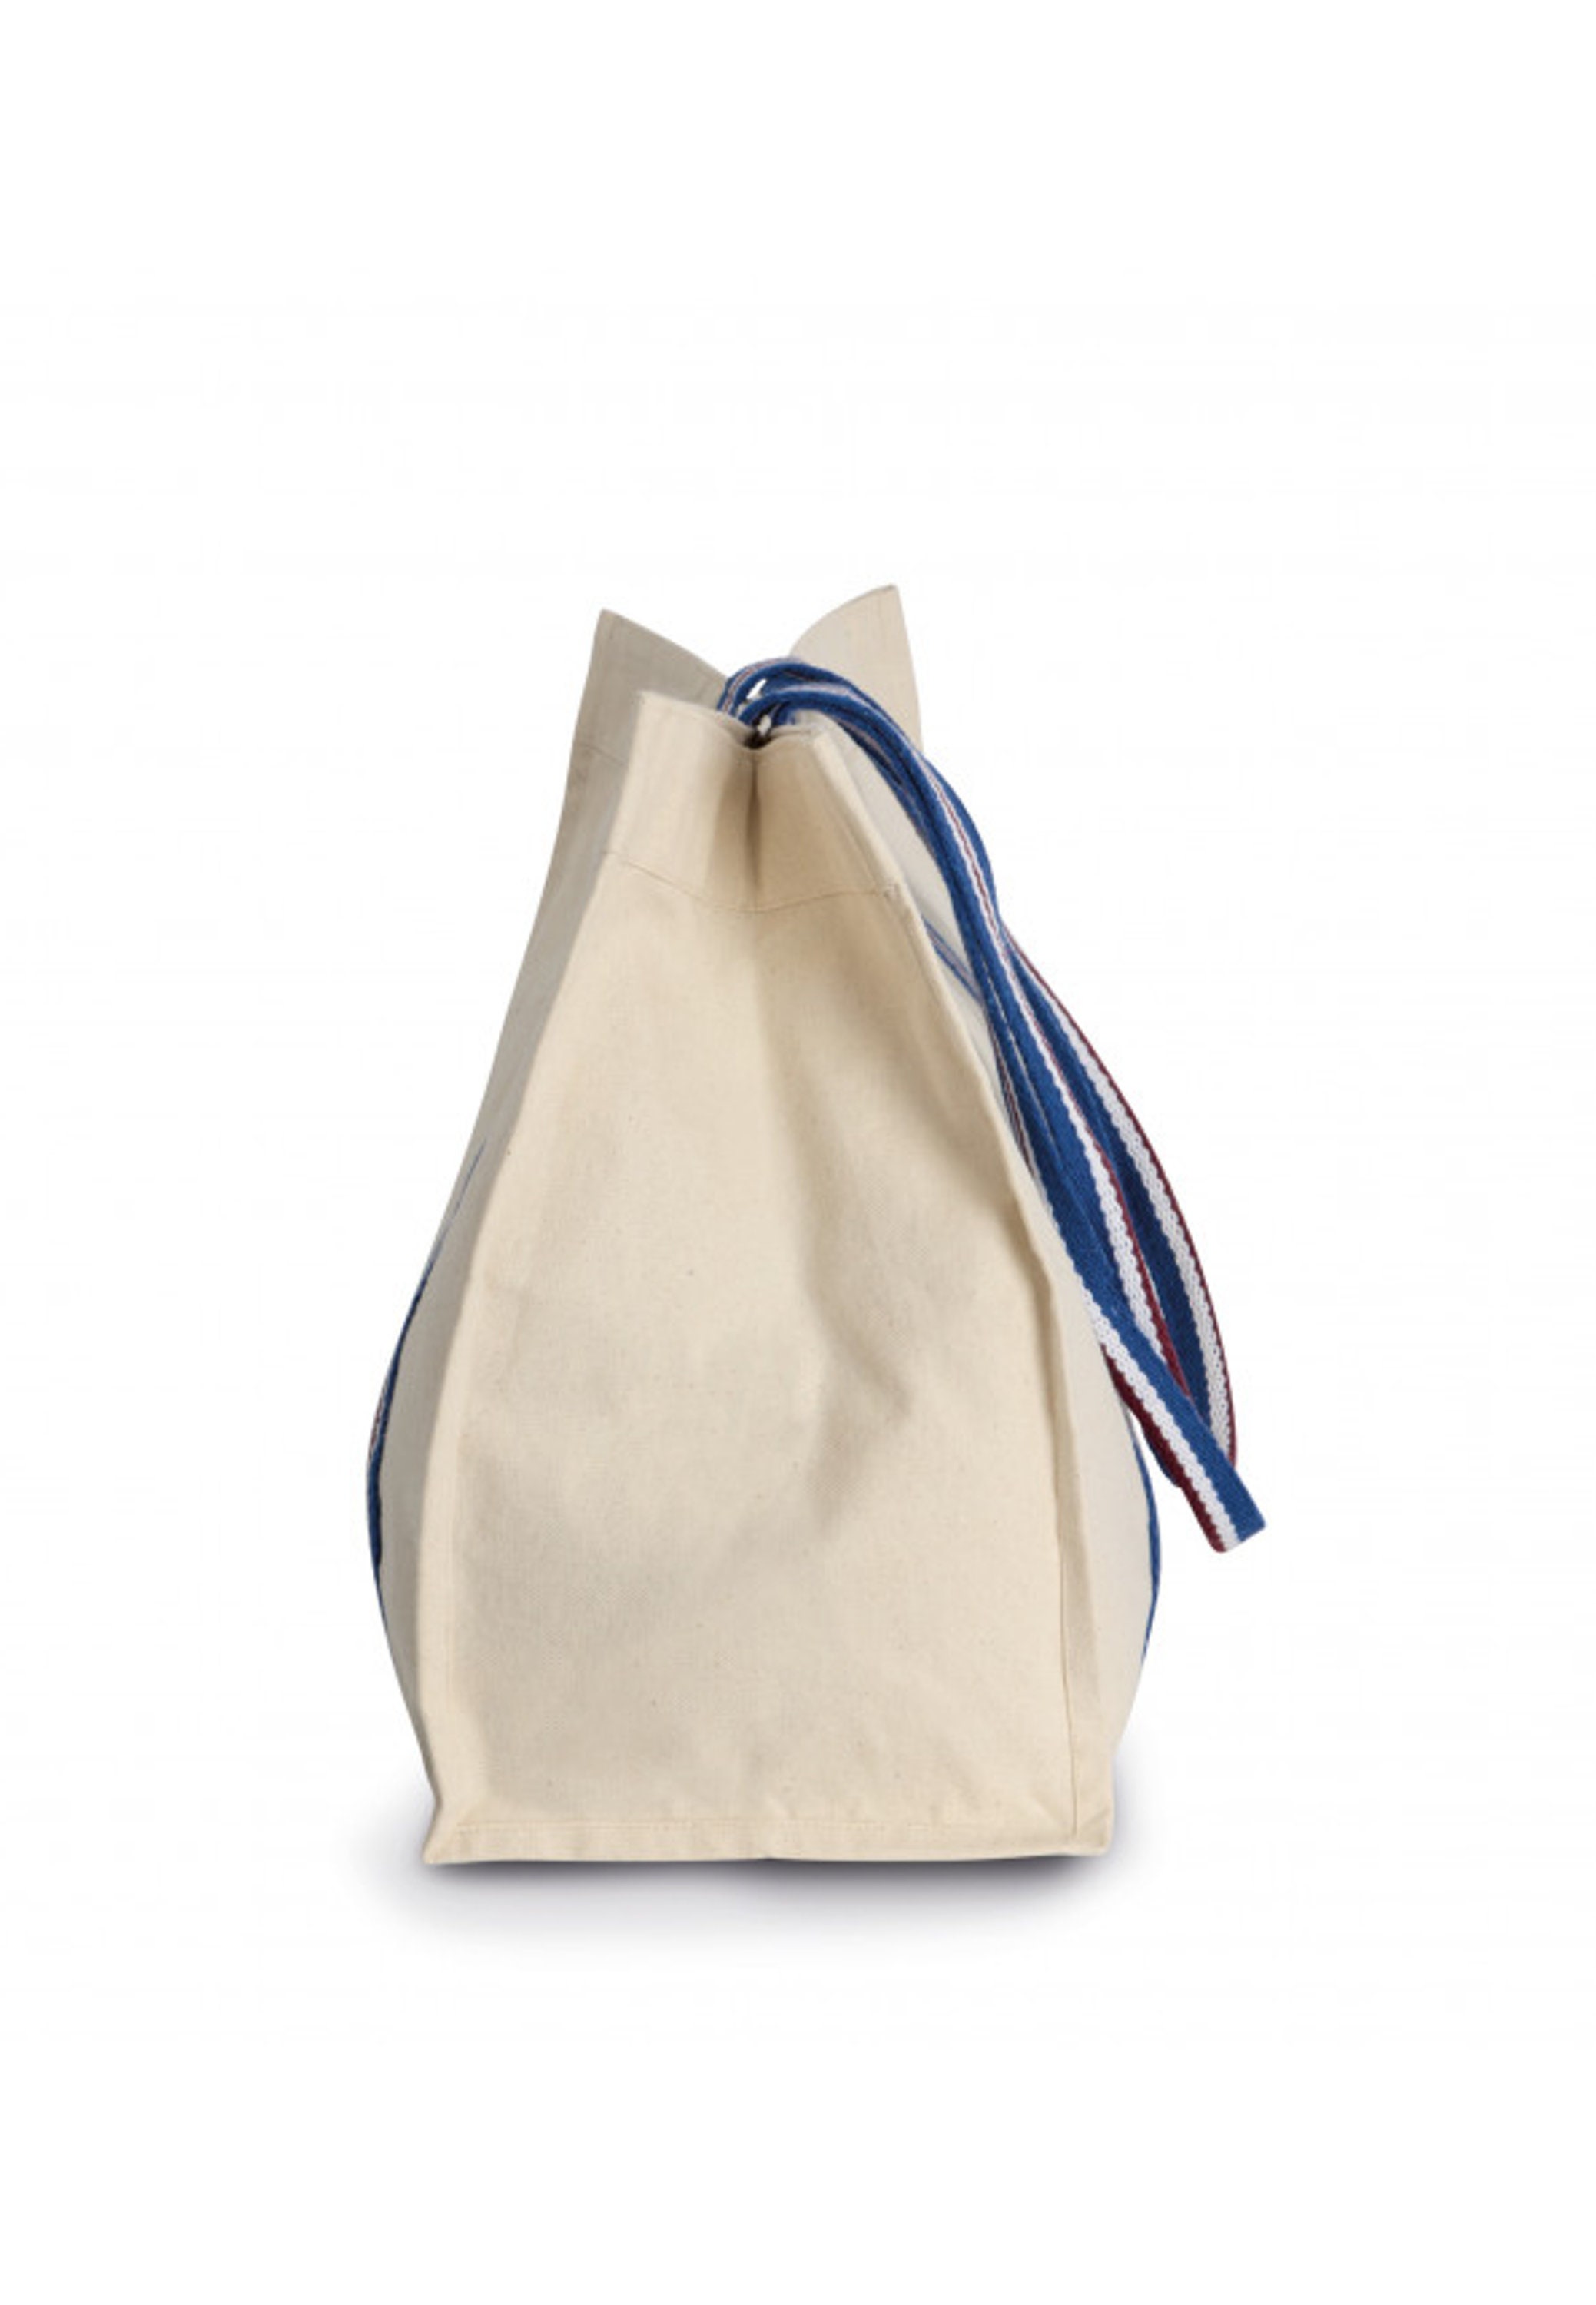 Organic cotton shopping bag.